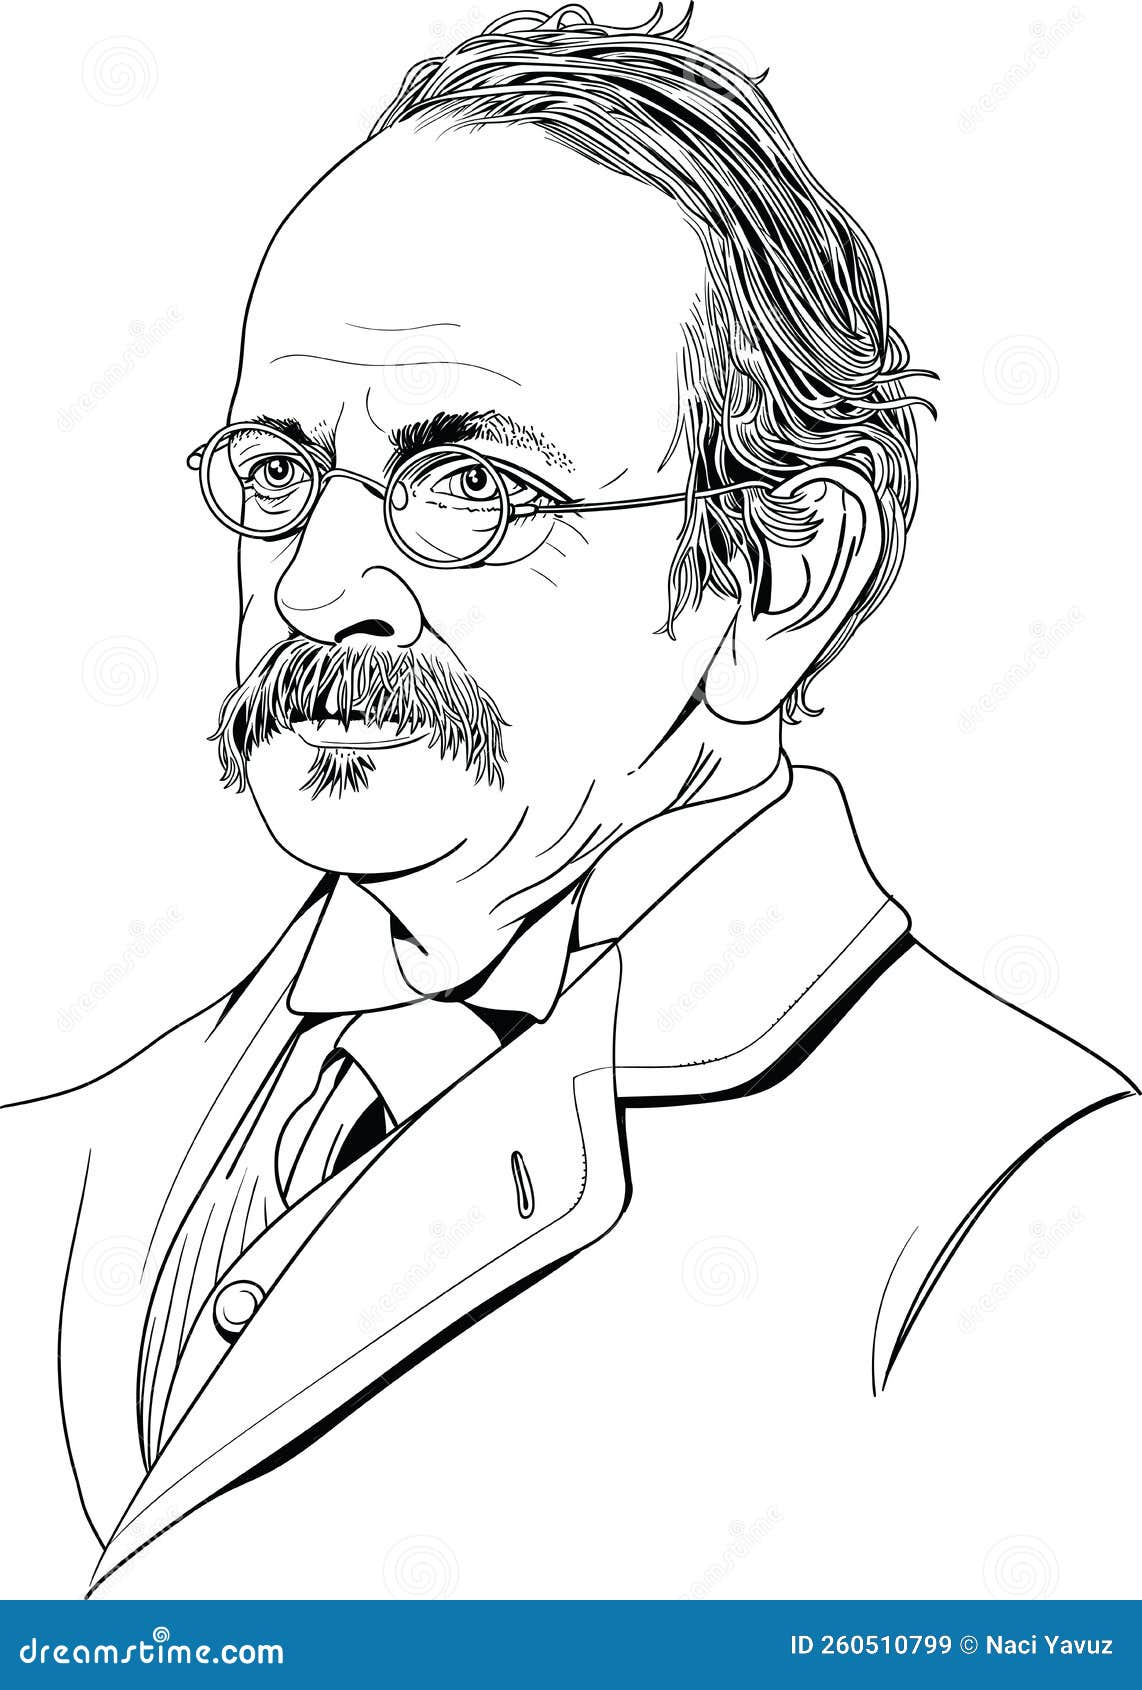 sir j. j. thomson cartoon style portrait